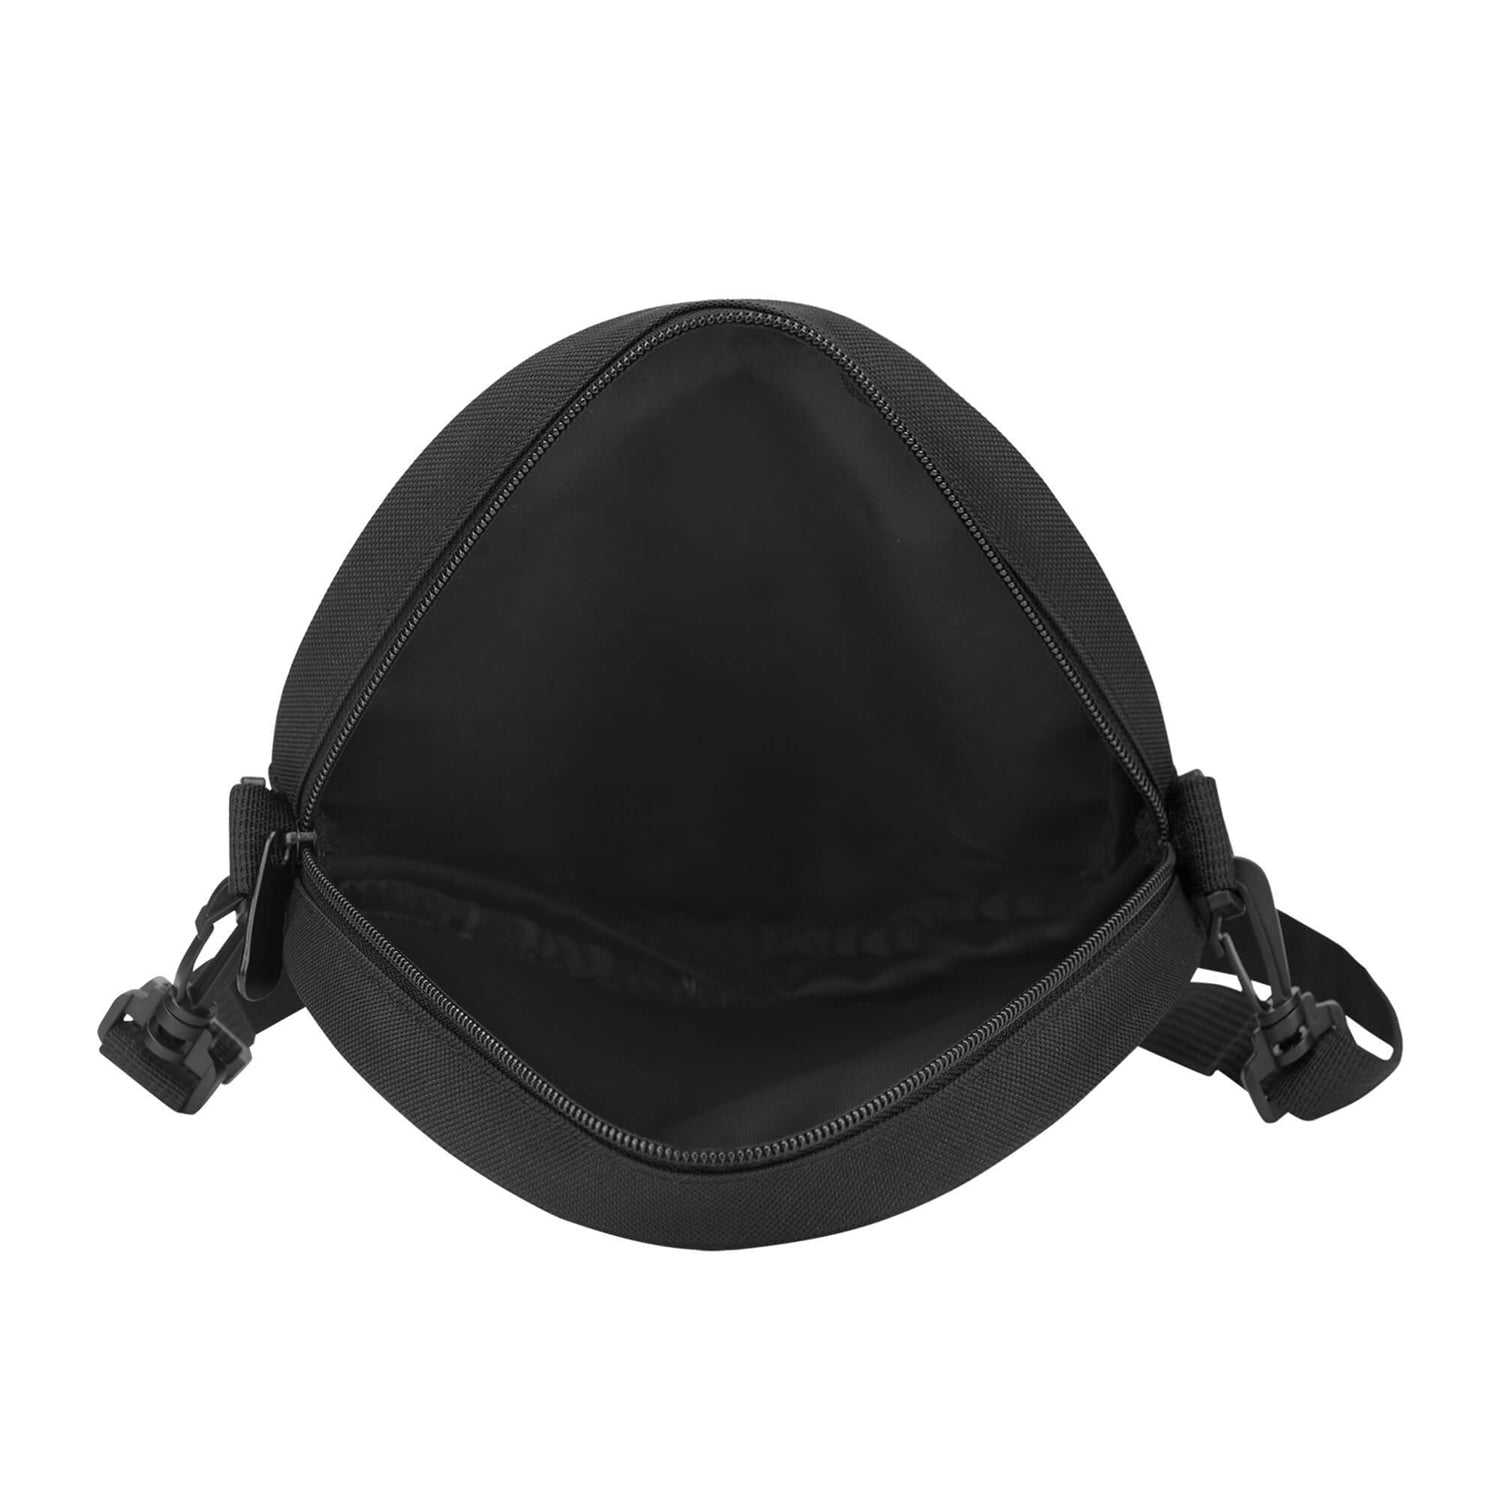 pritchard-tartan-round-satchel-bags